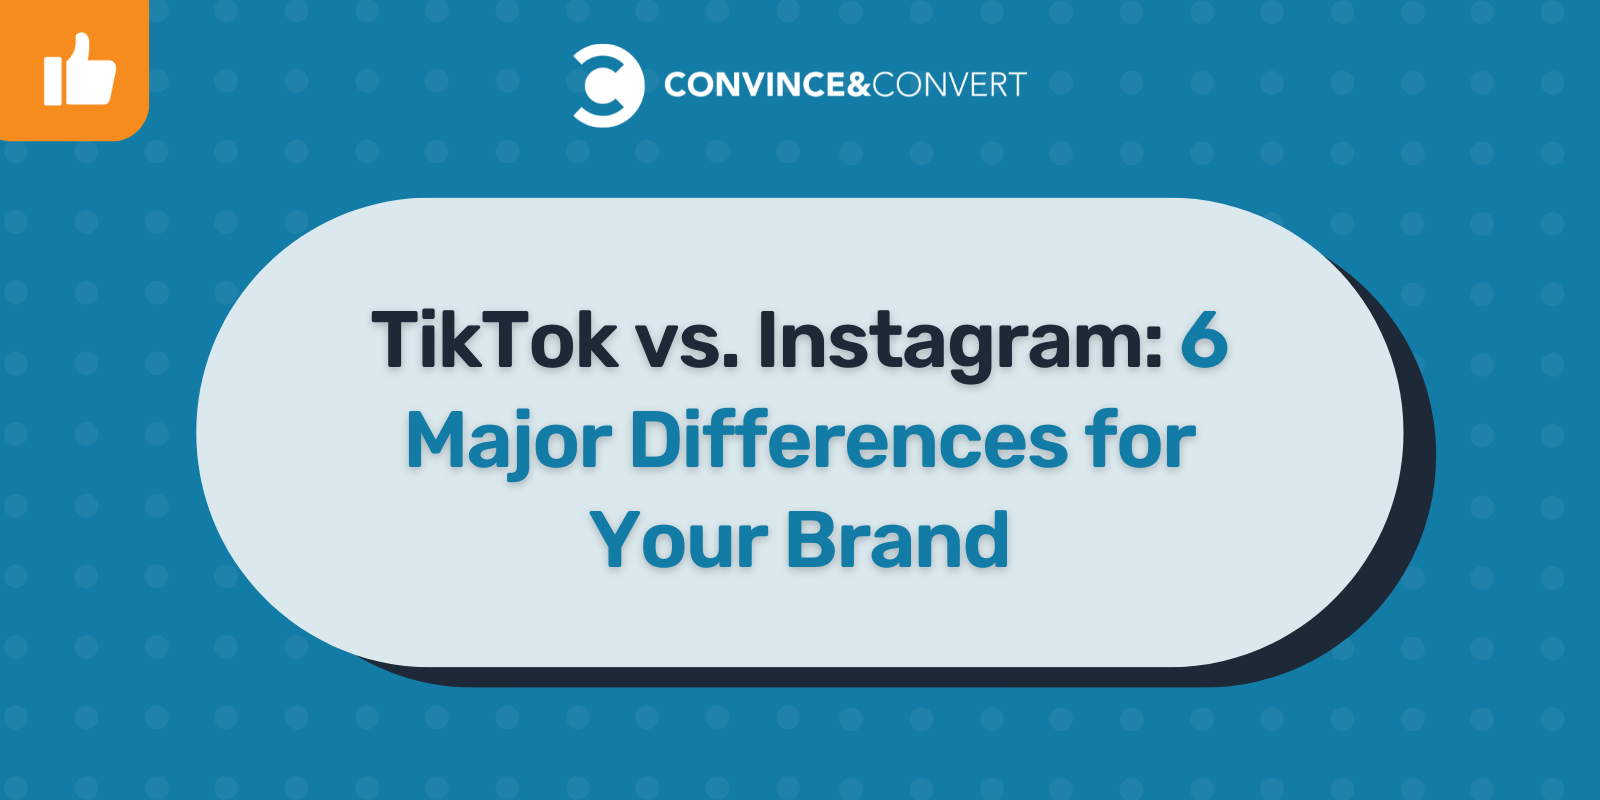 TikTok vs. Instagram: 6 Major Differences for Your Brand